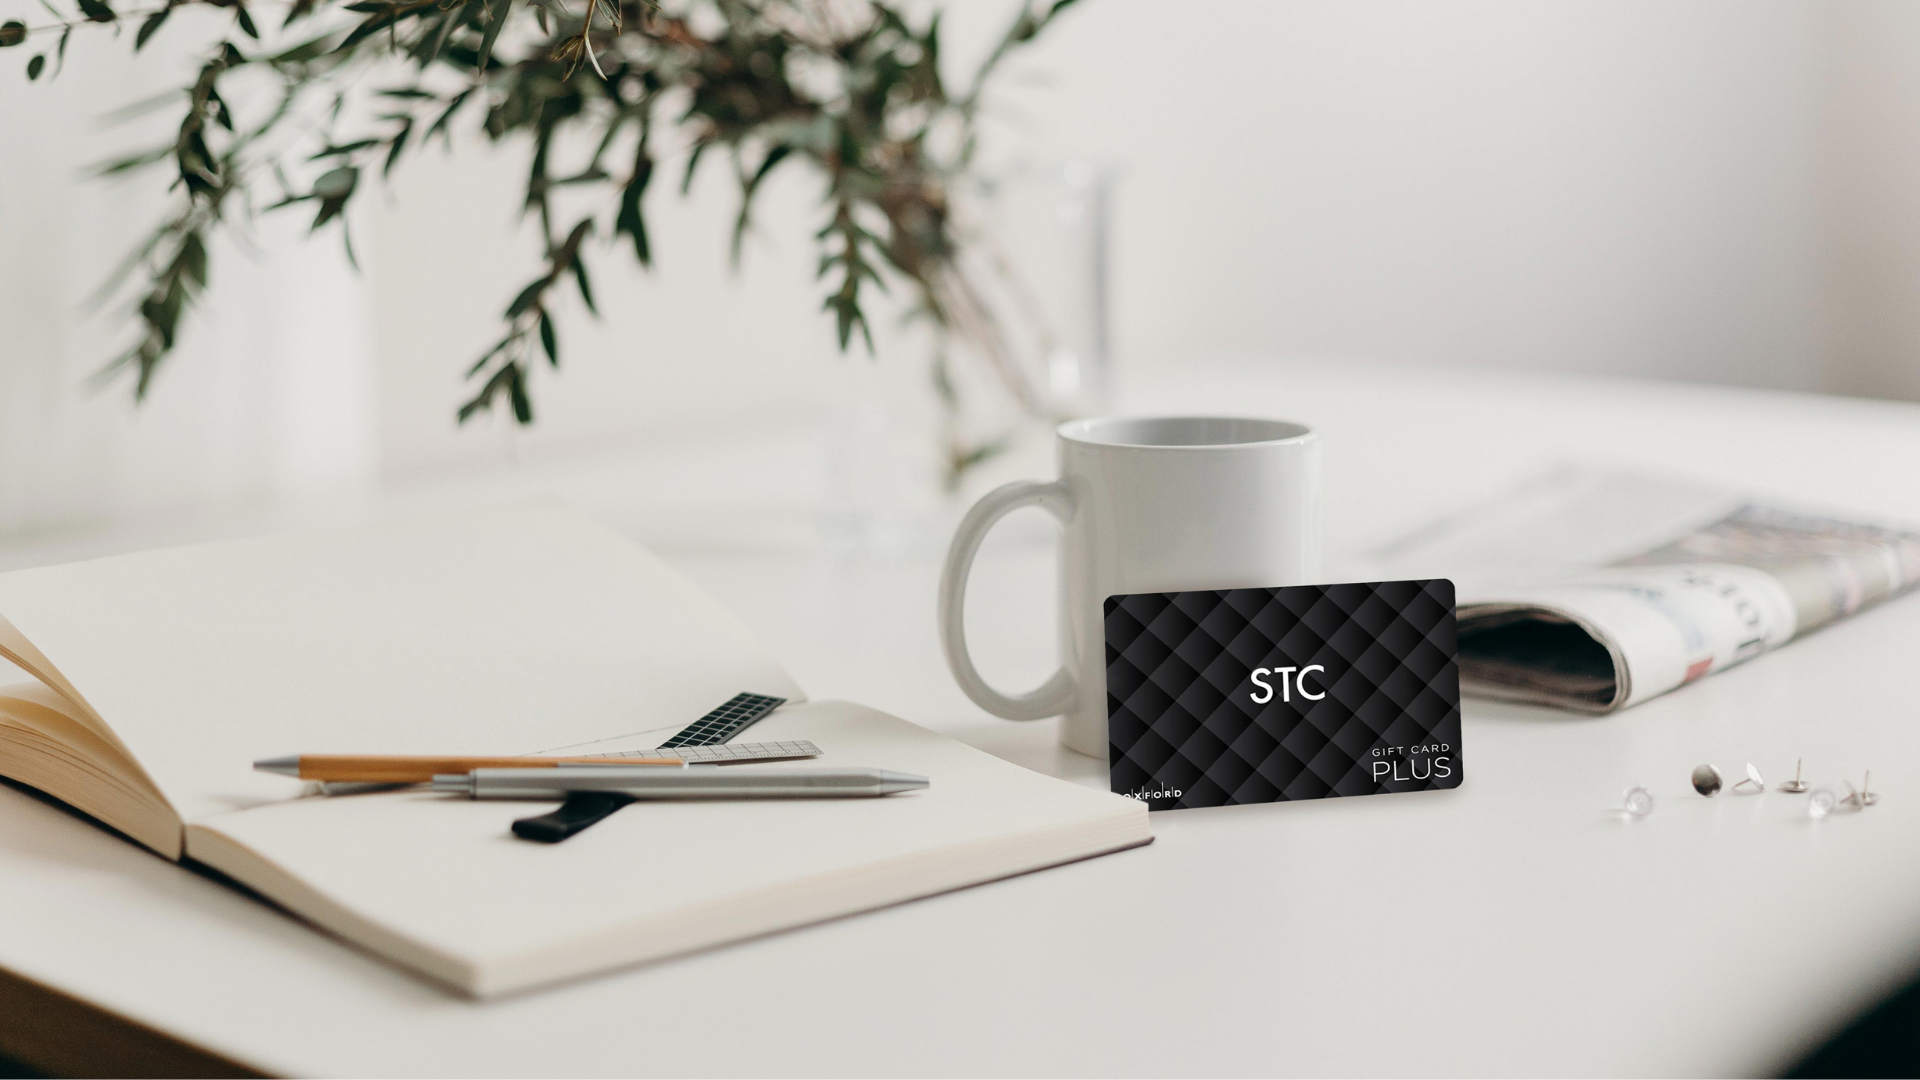 STC Gift Card Image with Gift Card and Coffee Mug